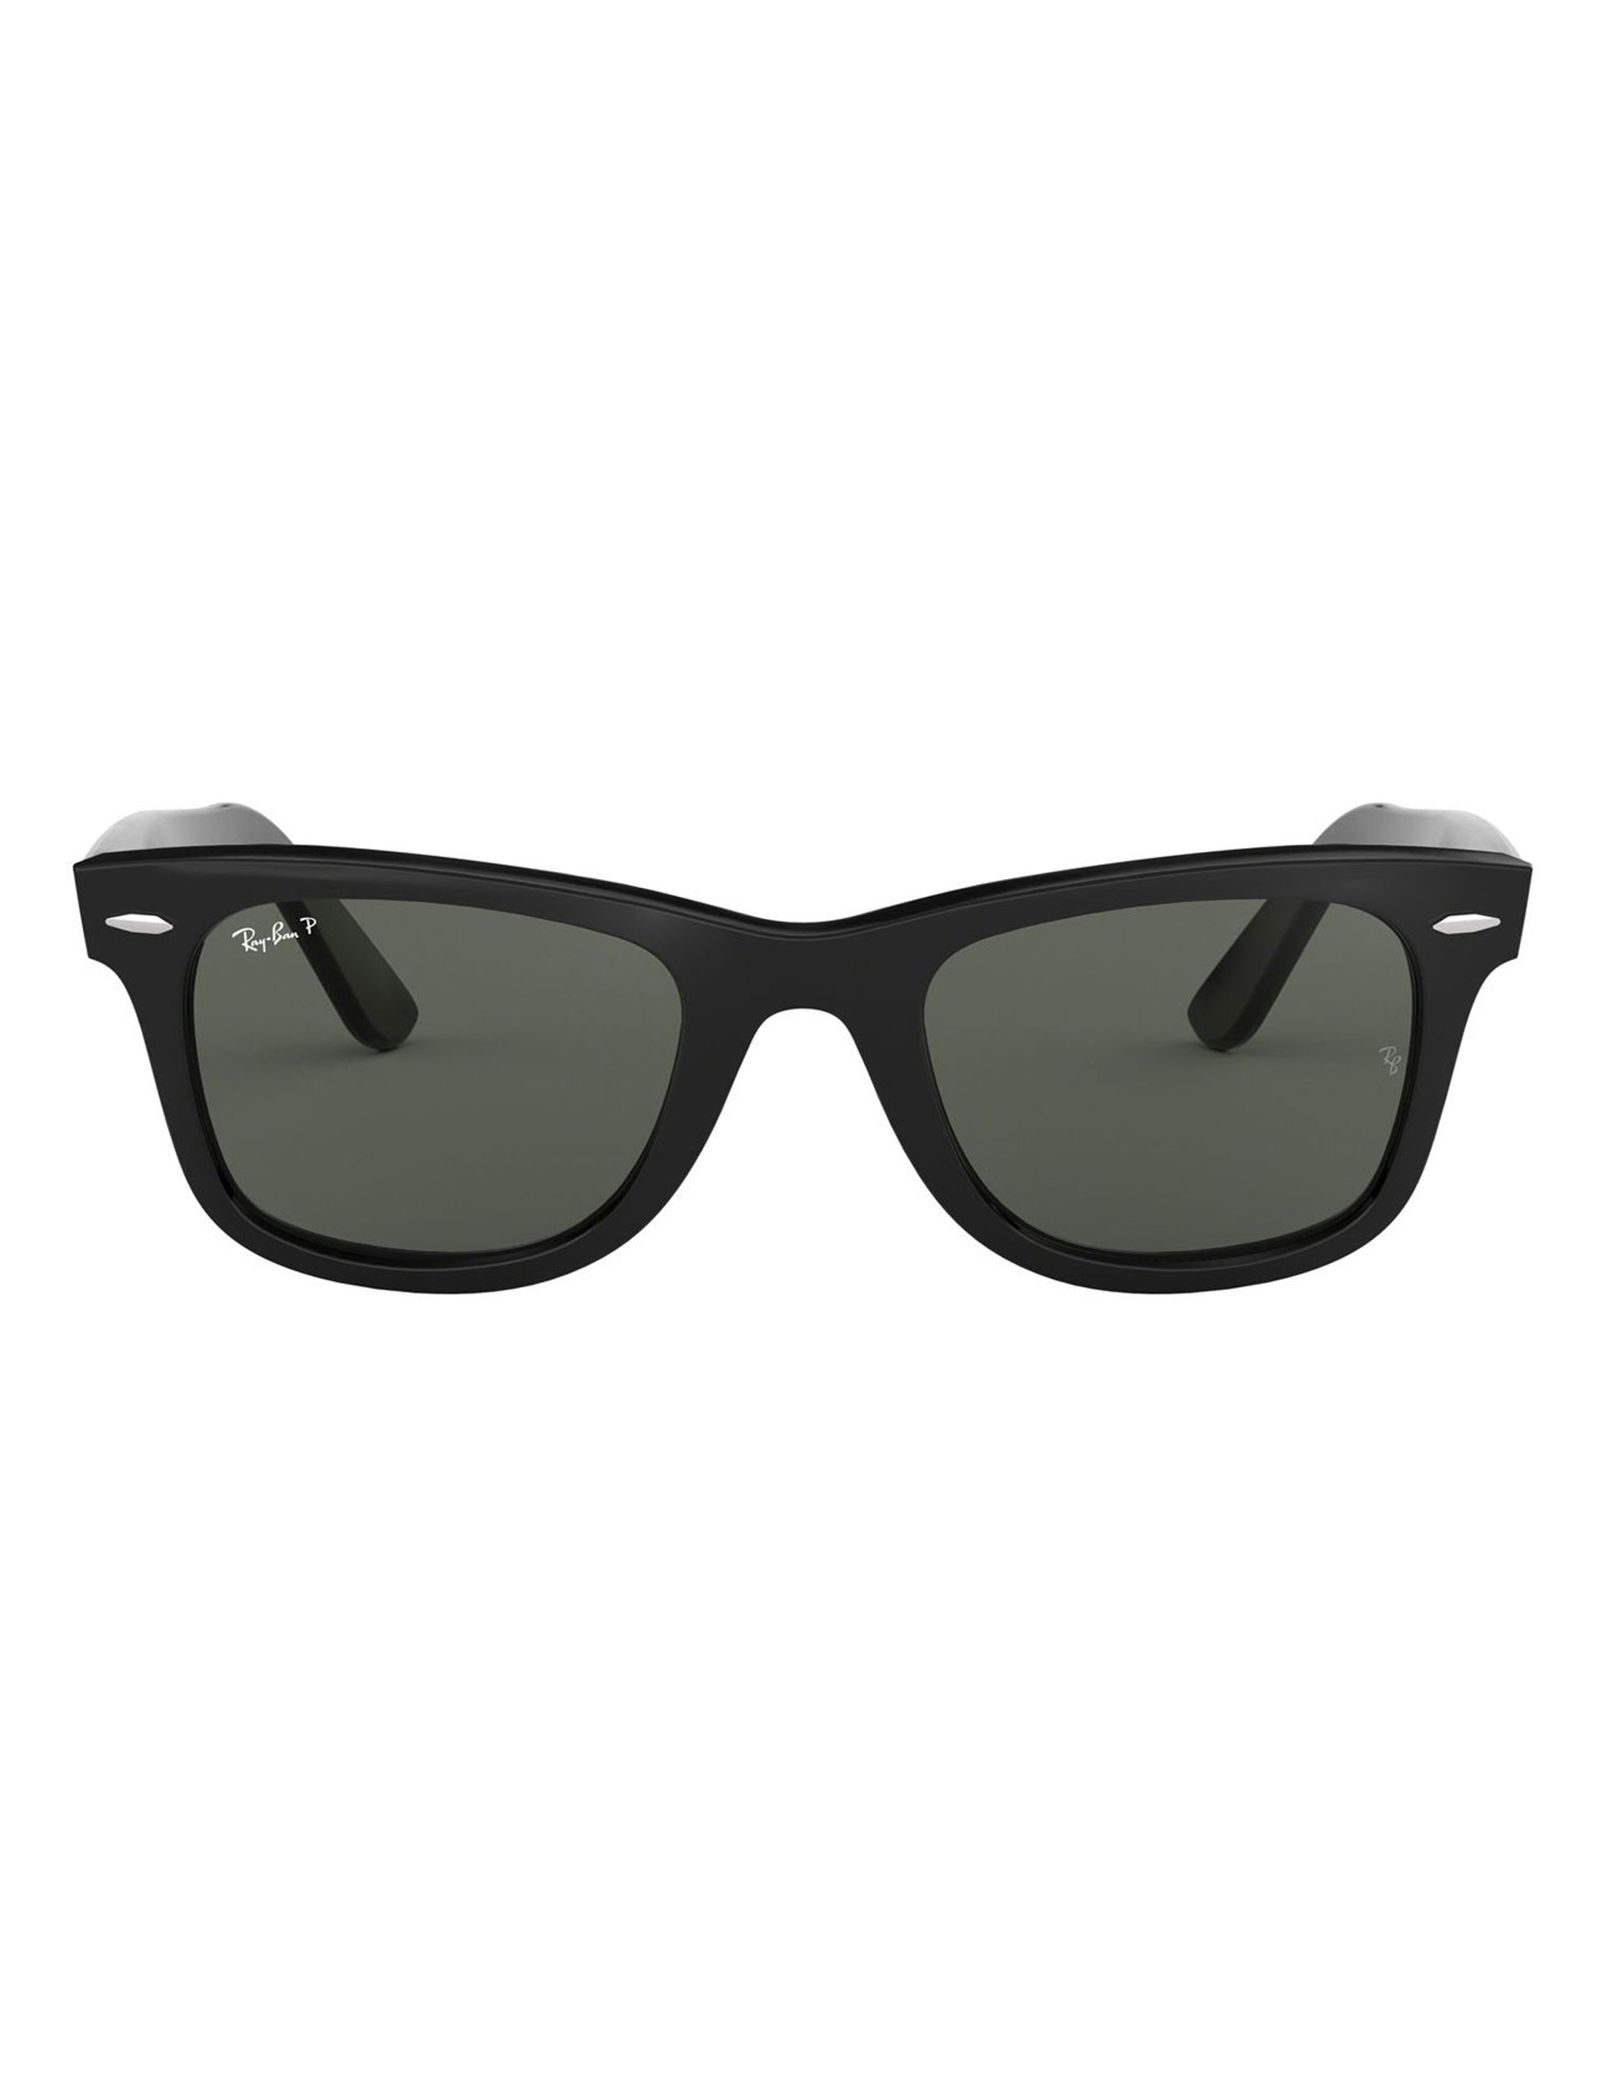 عینک آفتابی ری بن مدل 2140-901/58-54 - مشکی - 2